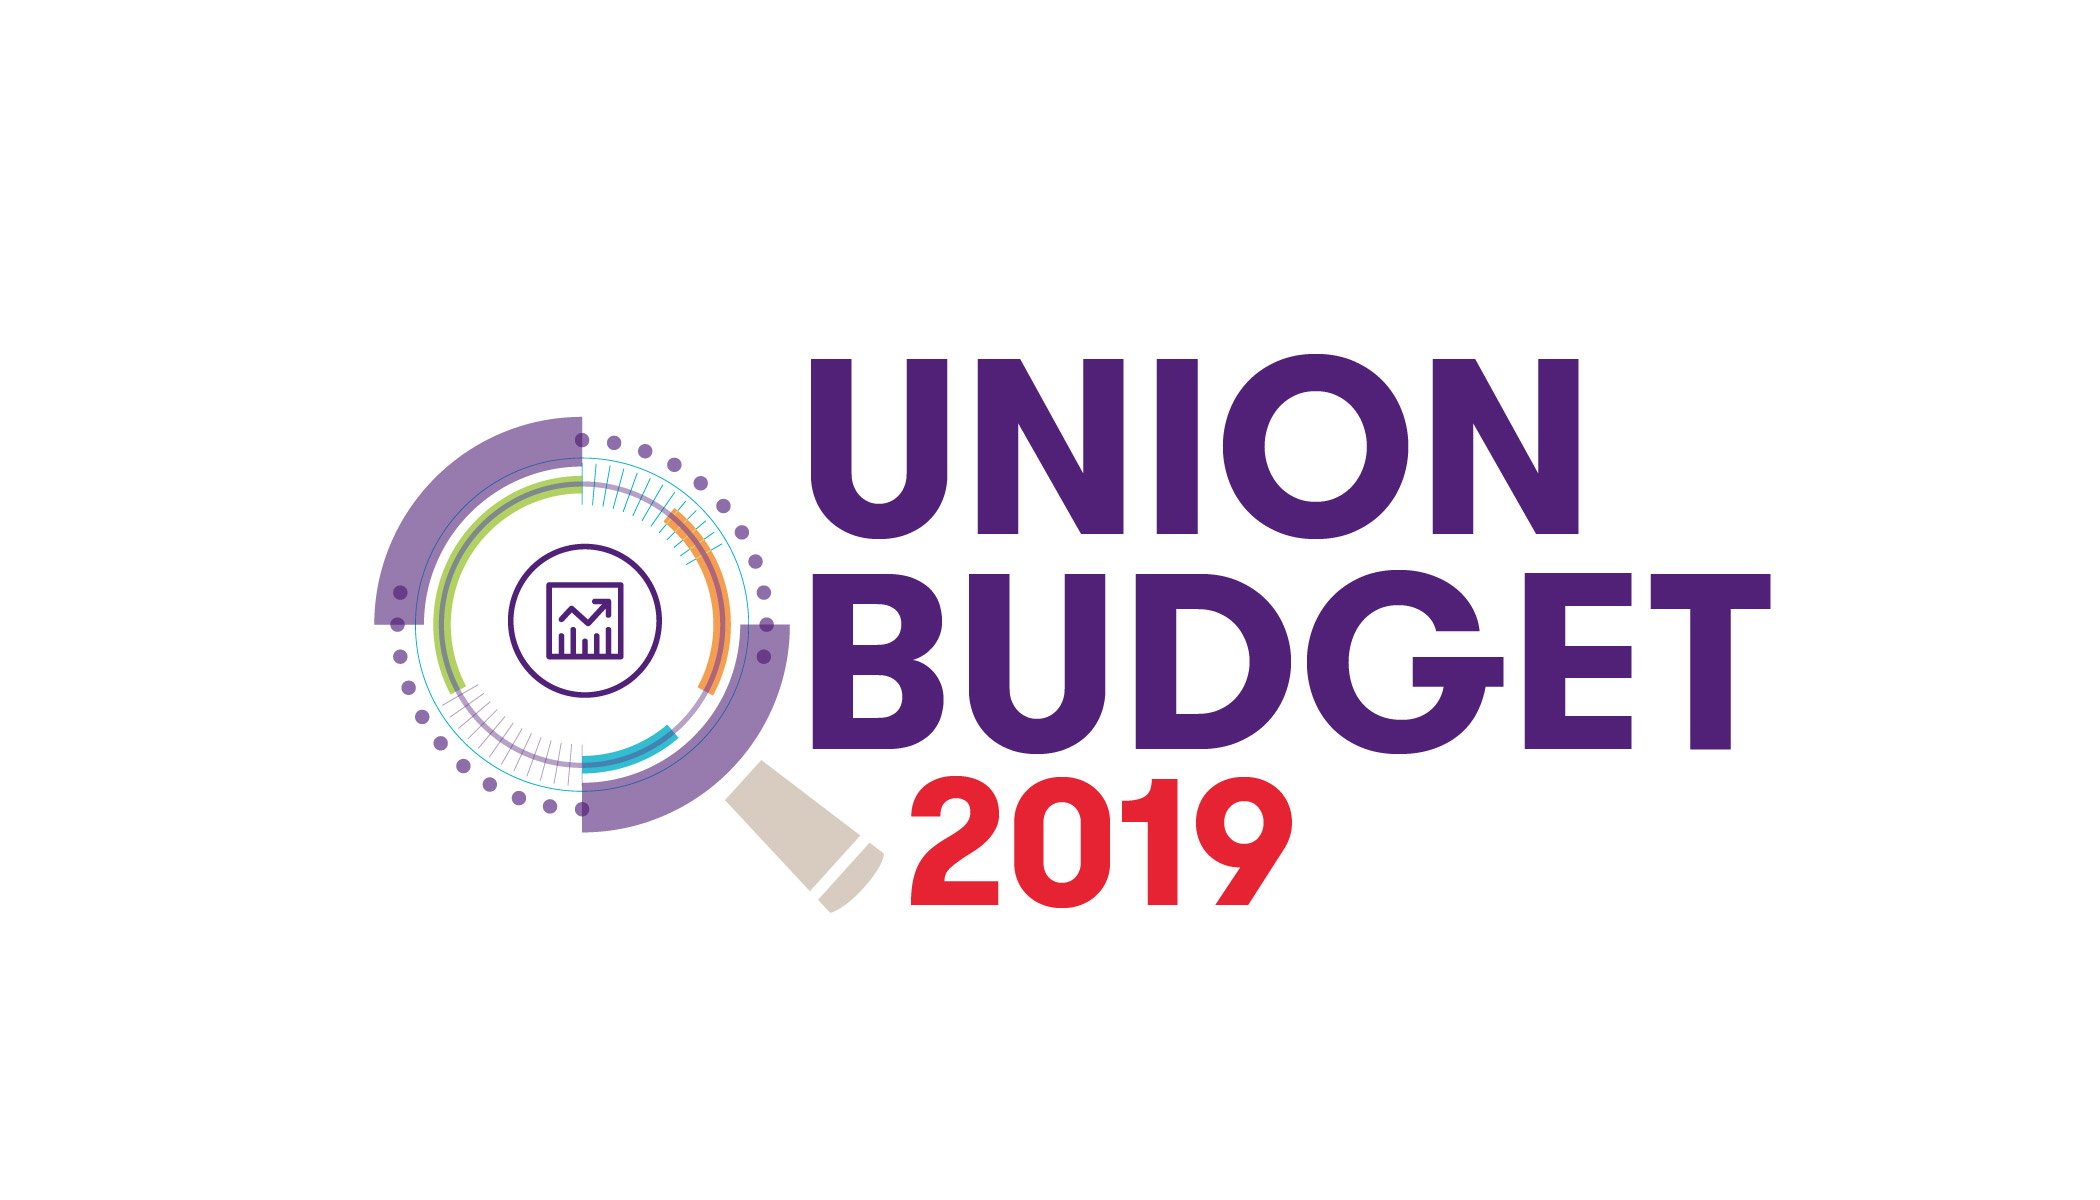 Union_budget_2019_logo.jpg